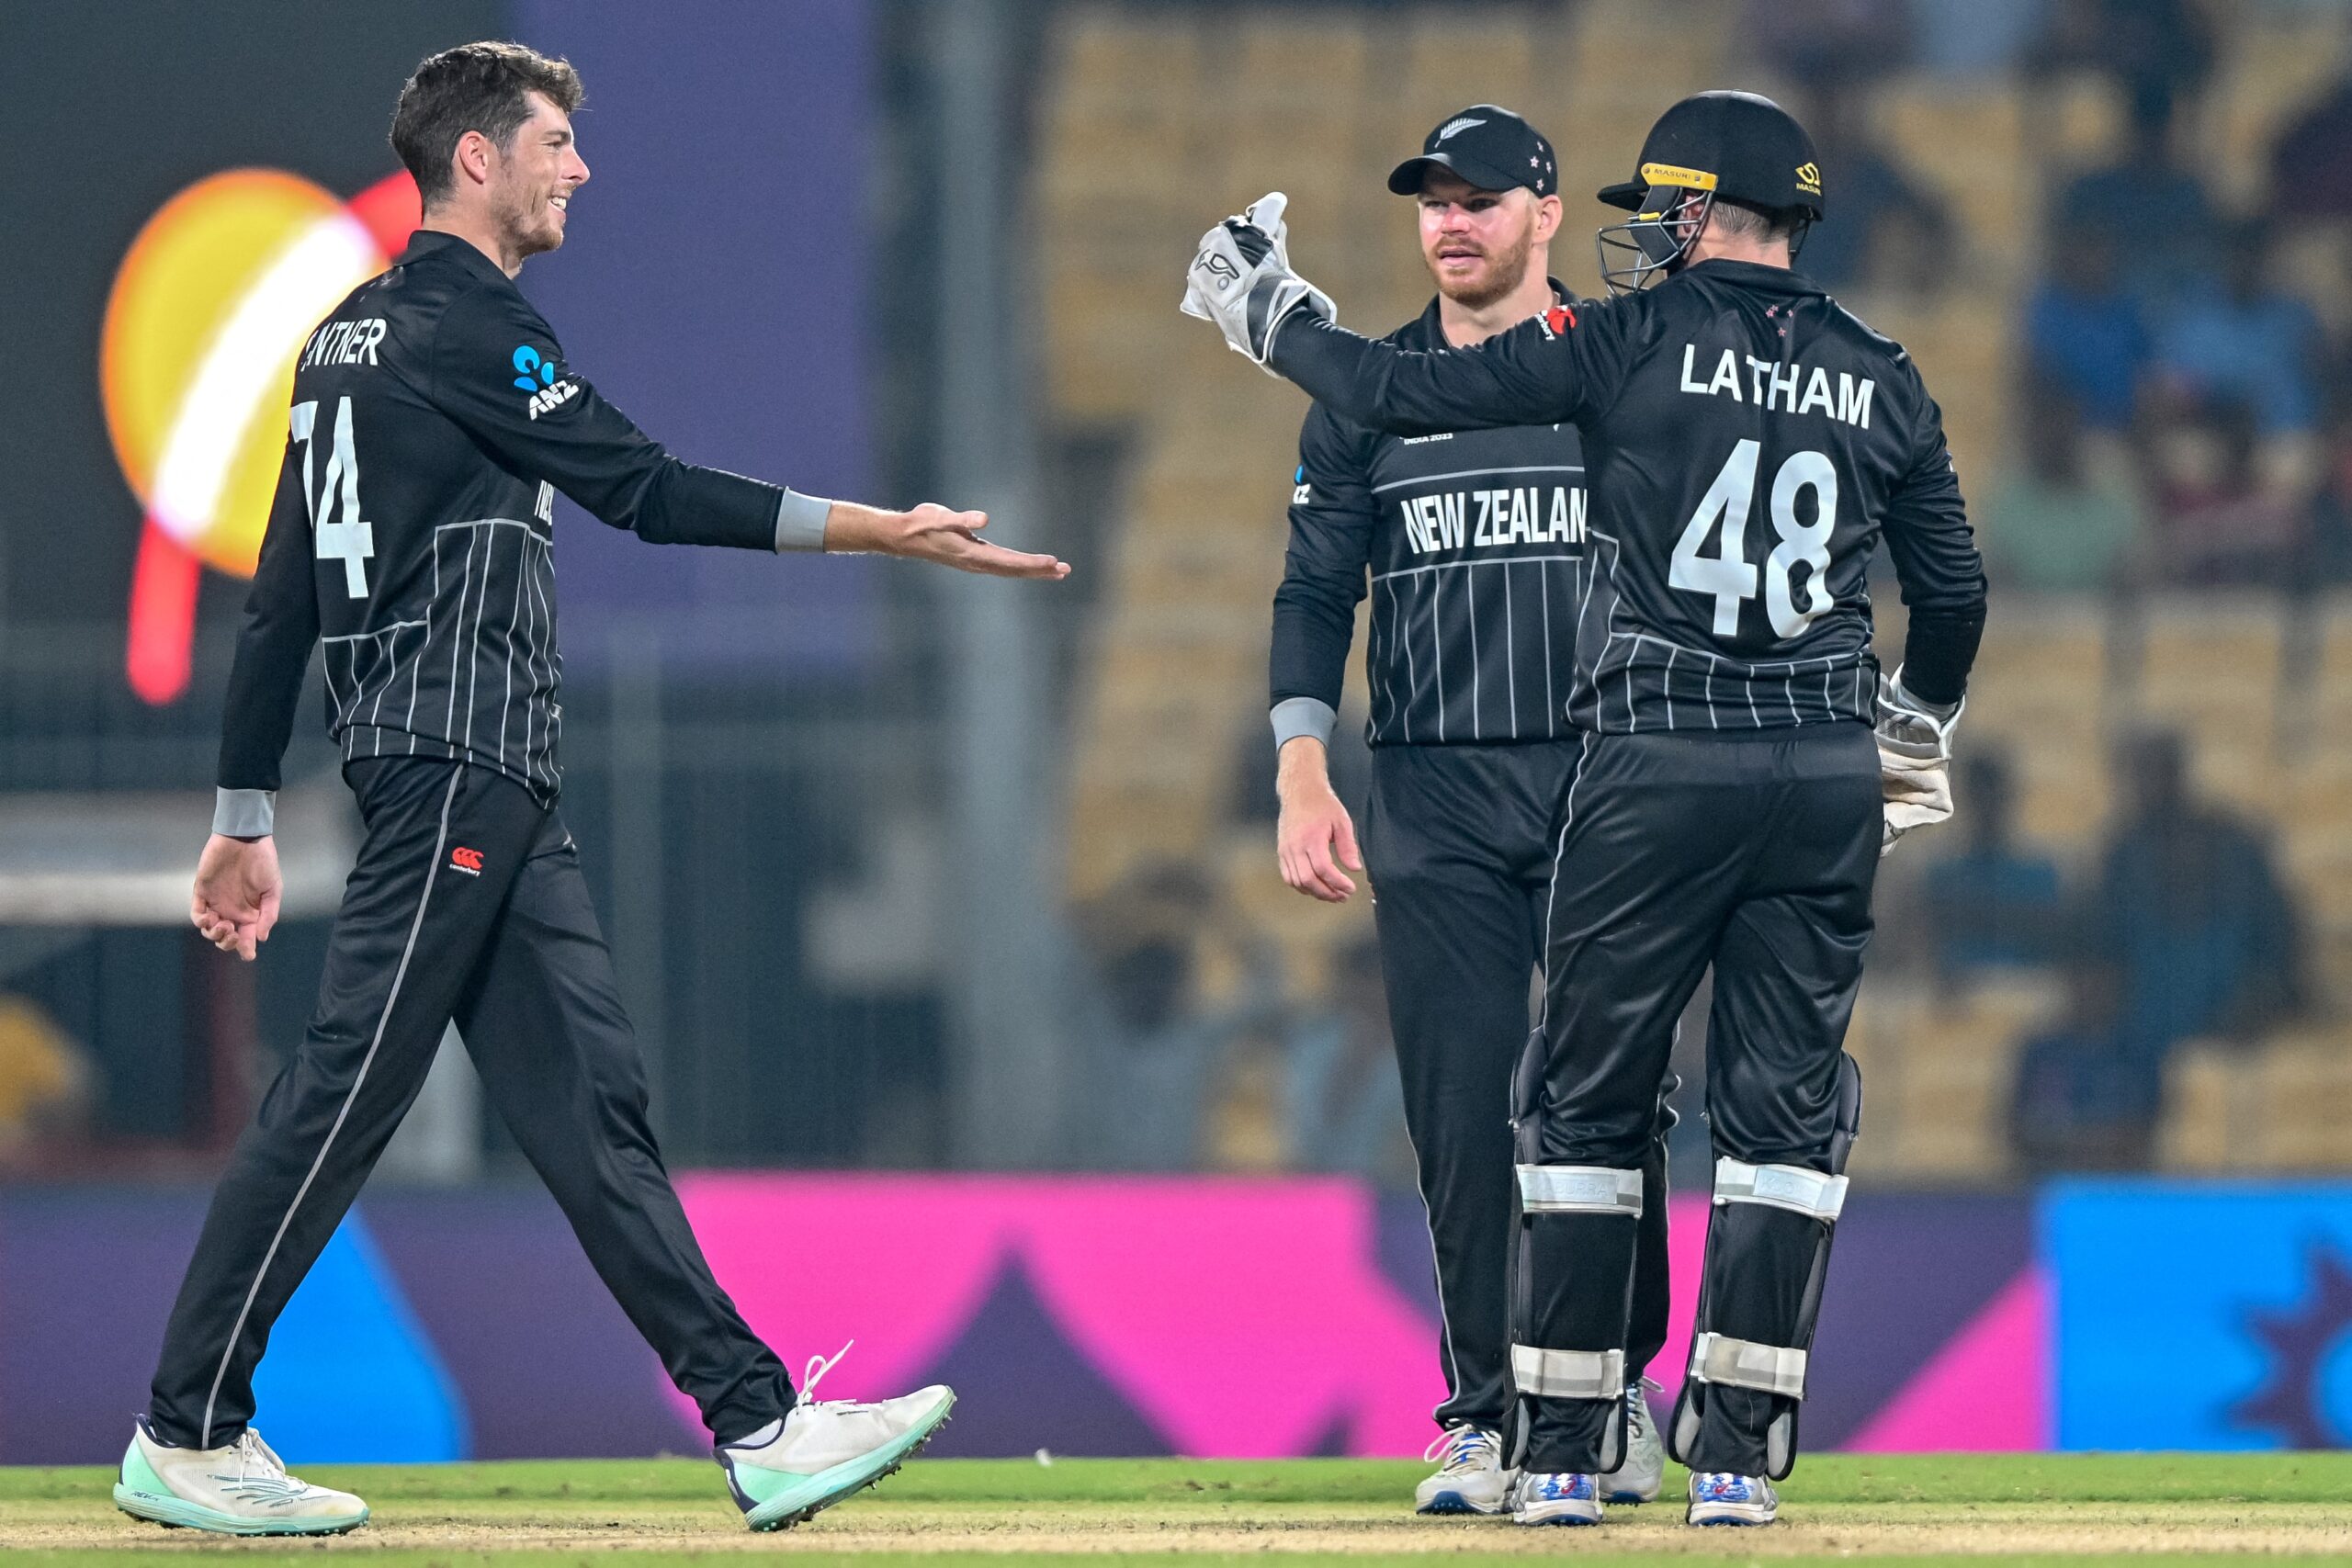 ODI World Cup: Thorough New Zealand Crush Afghanistan By 149 Runs